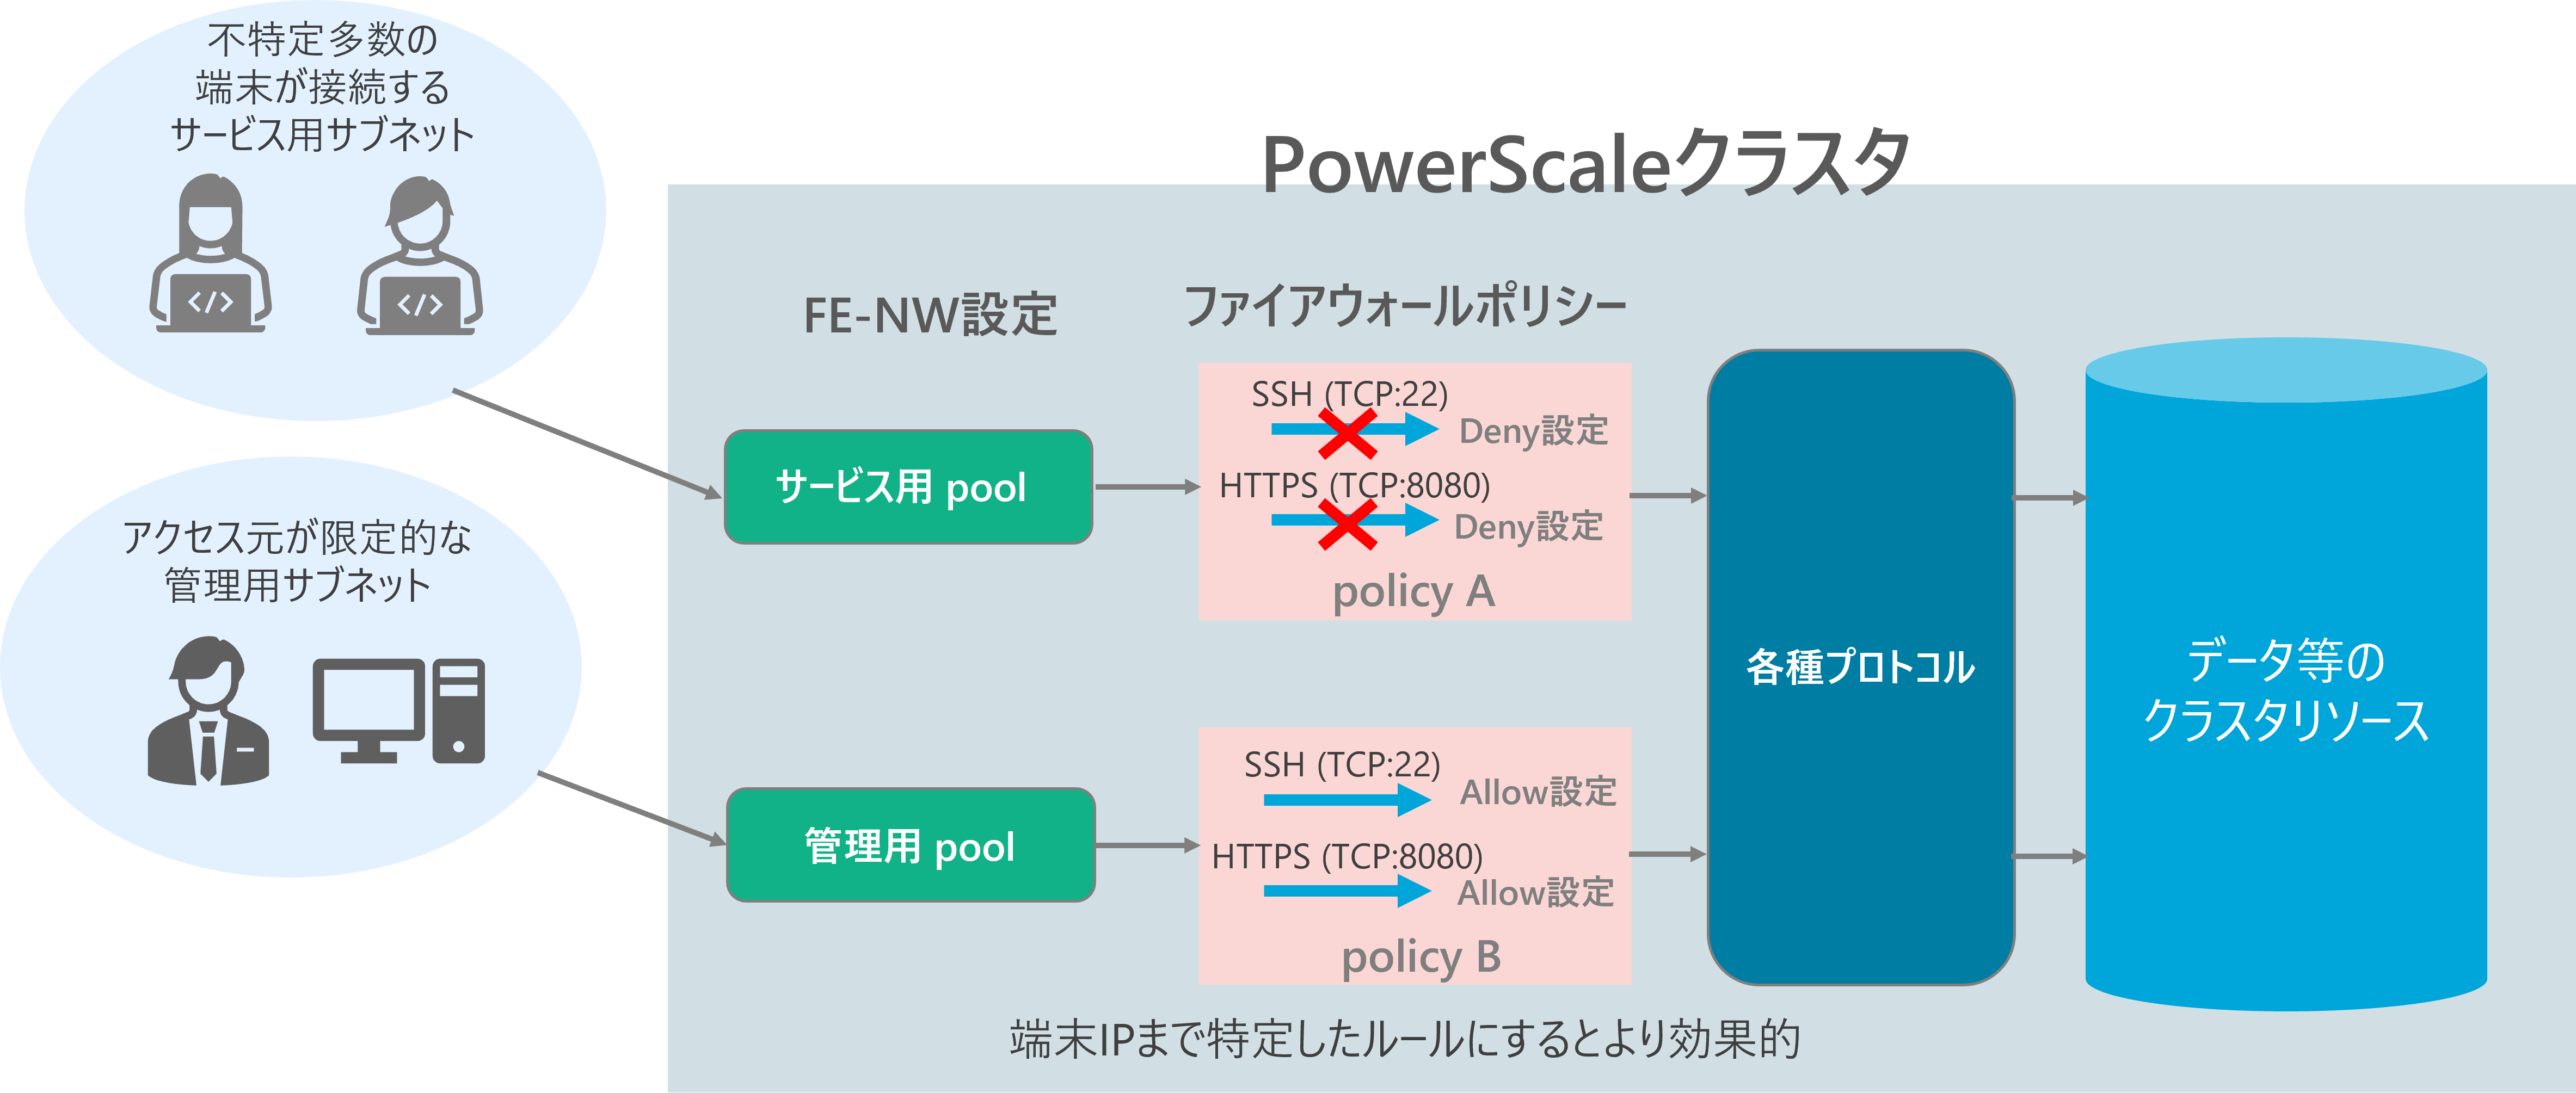 PowerScale Isilonコラム 活用ユースケース1－東京エレクトロンデバイス